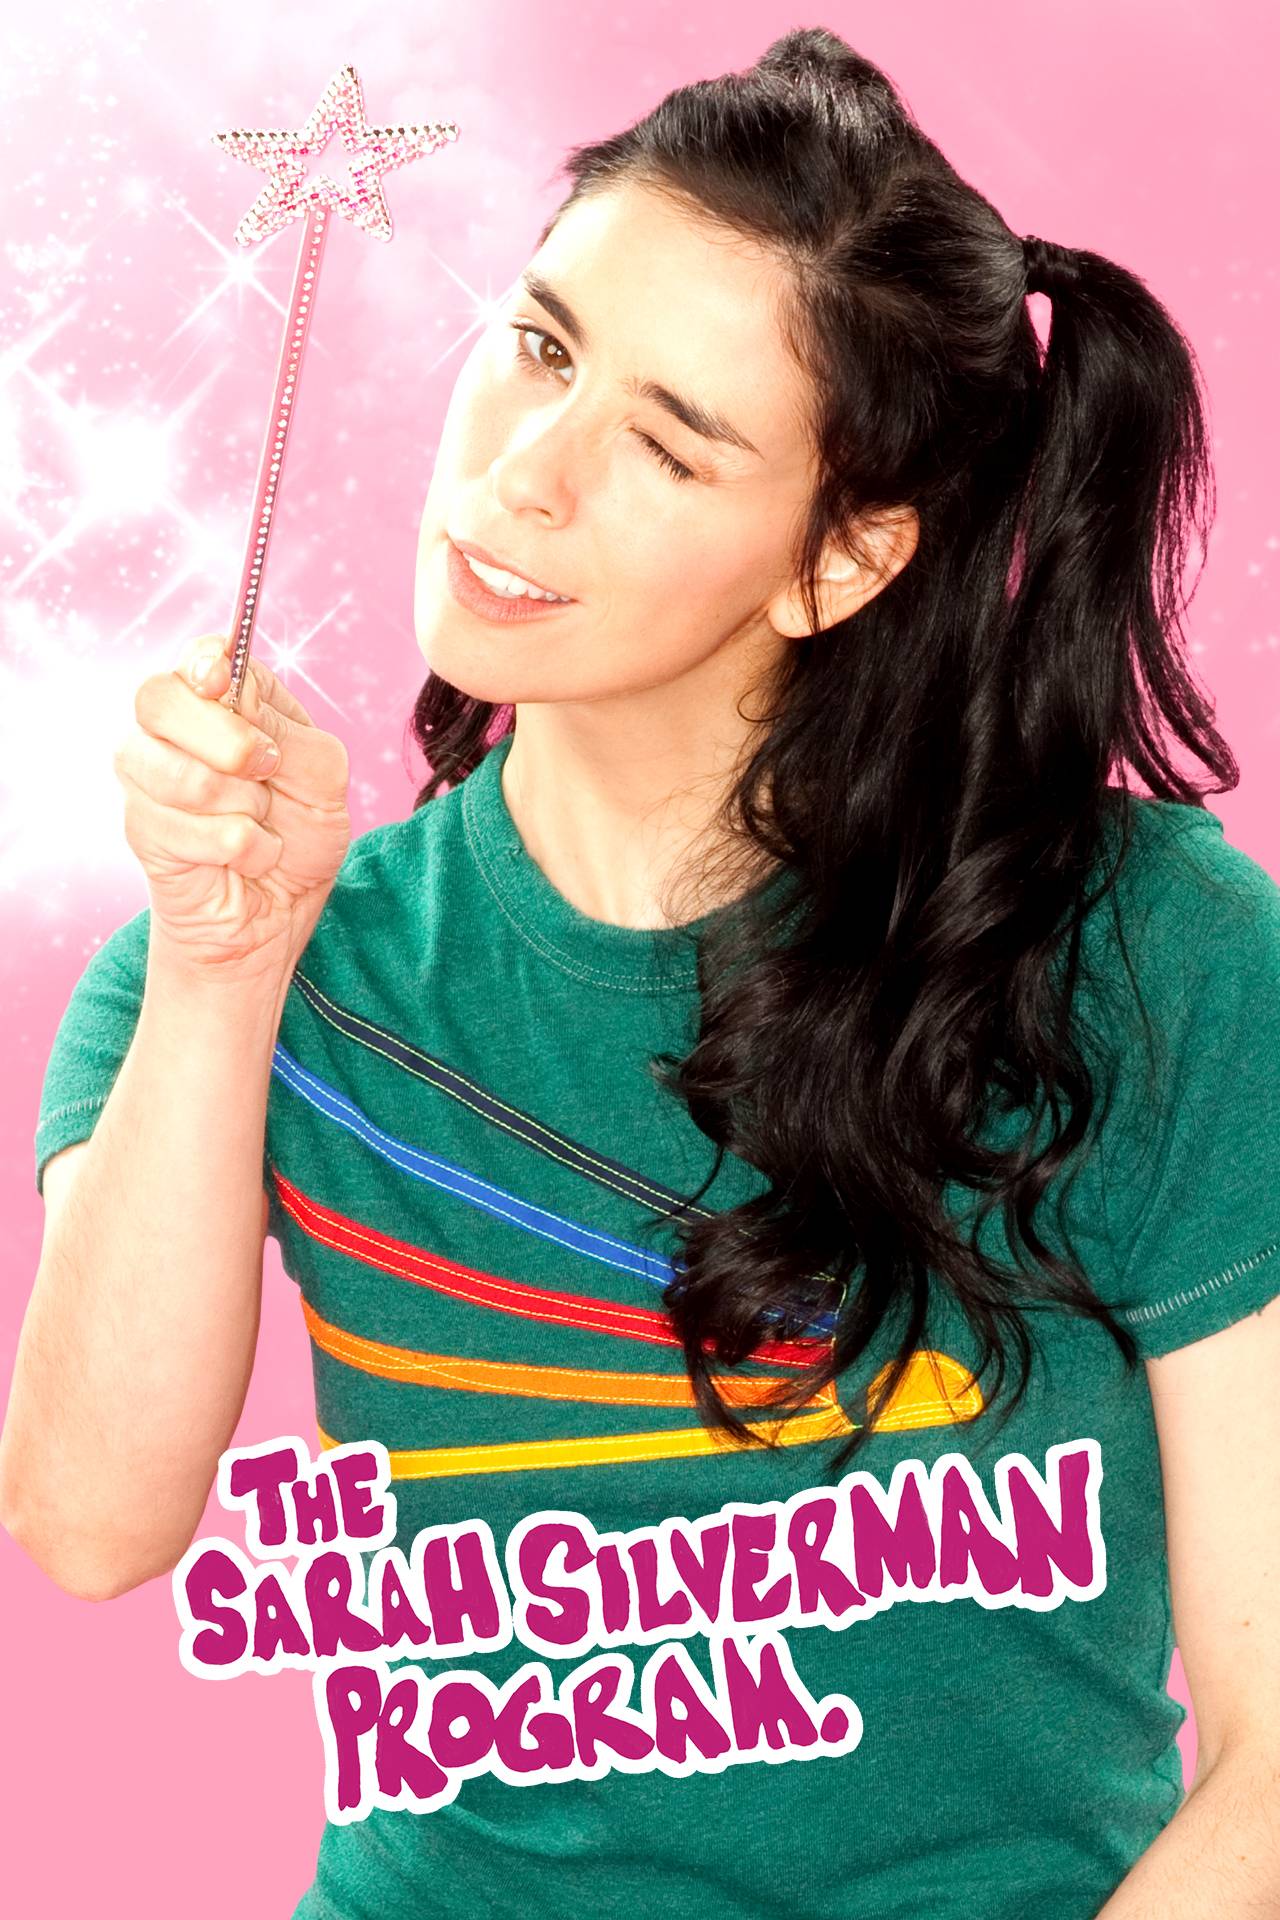 The Sarah Silverman Program - TV Series | Comedy Central US